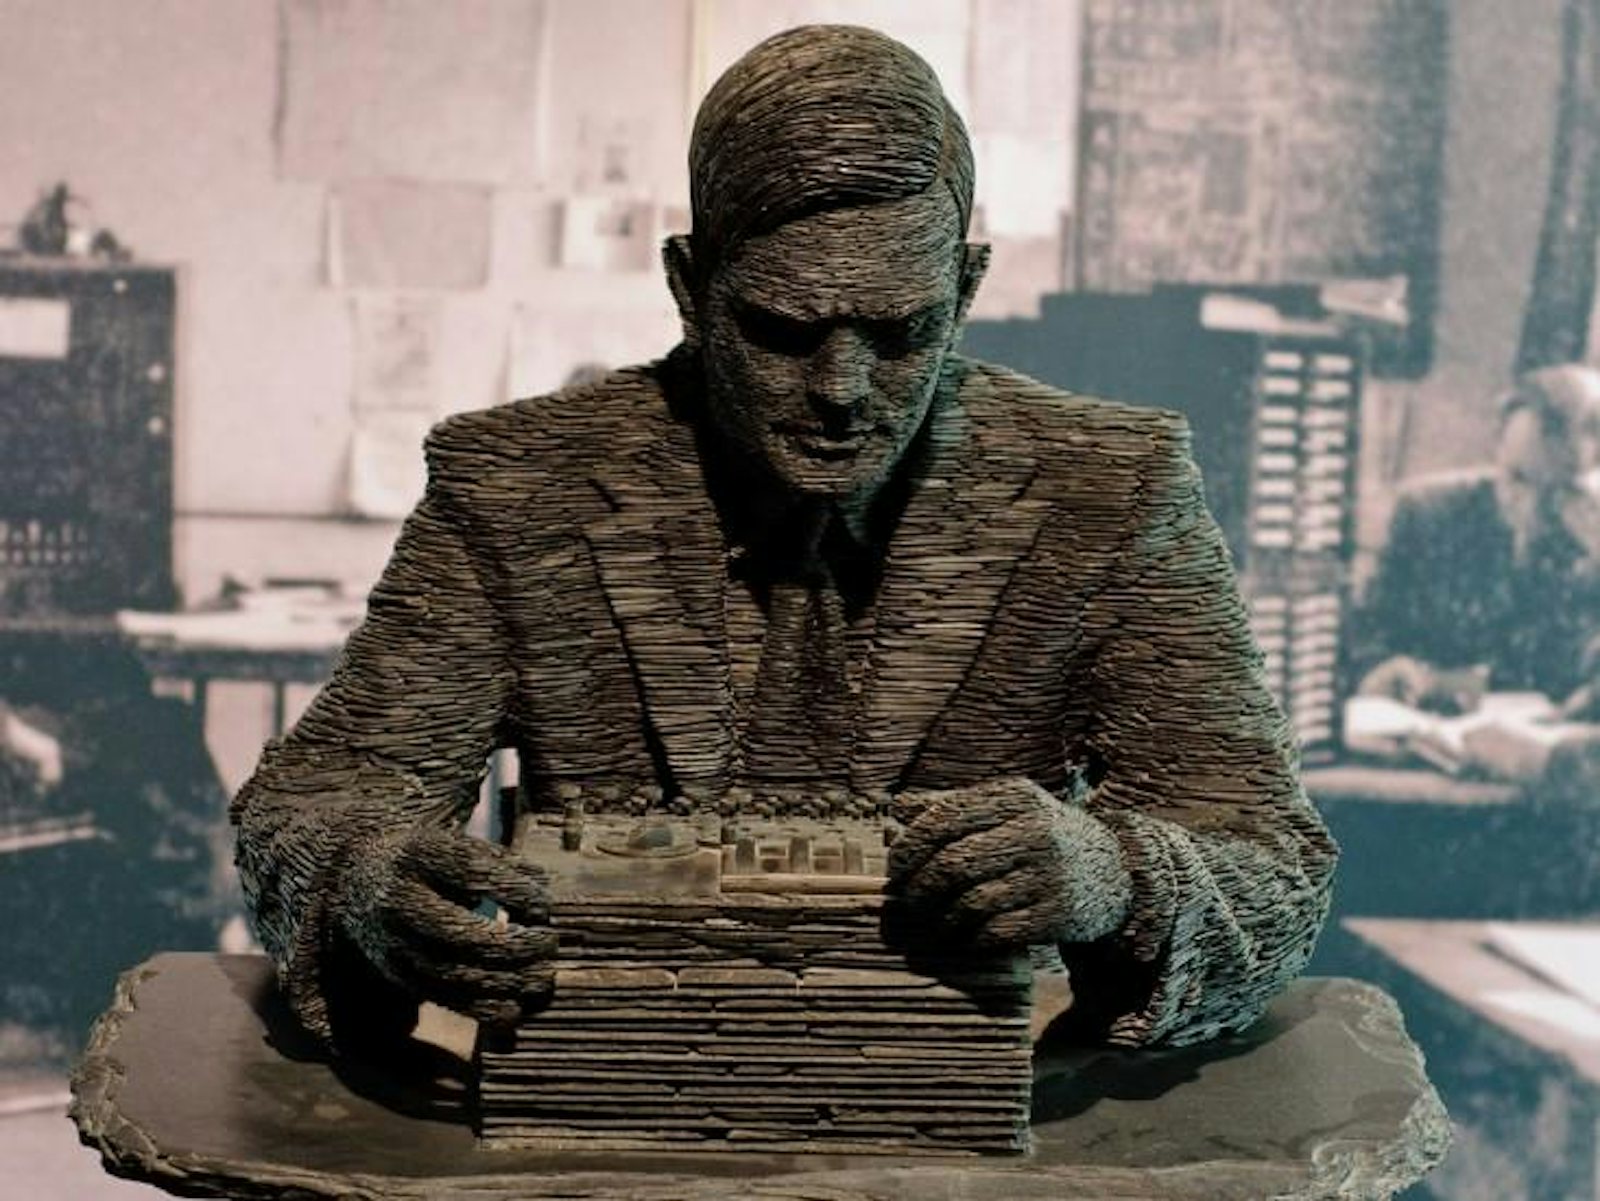 Alan Turing sculpture Bletchley Park Stephen Kettle 